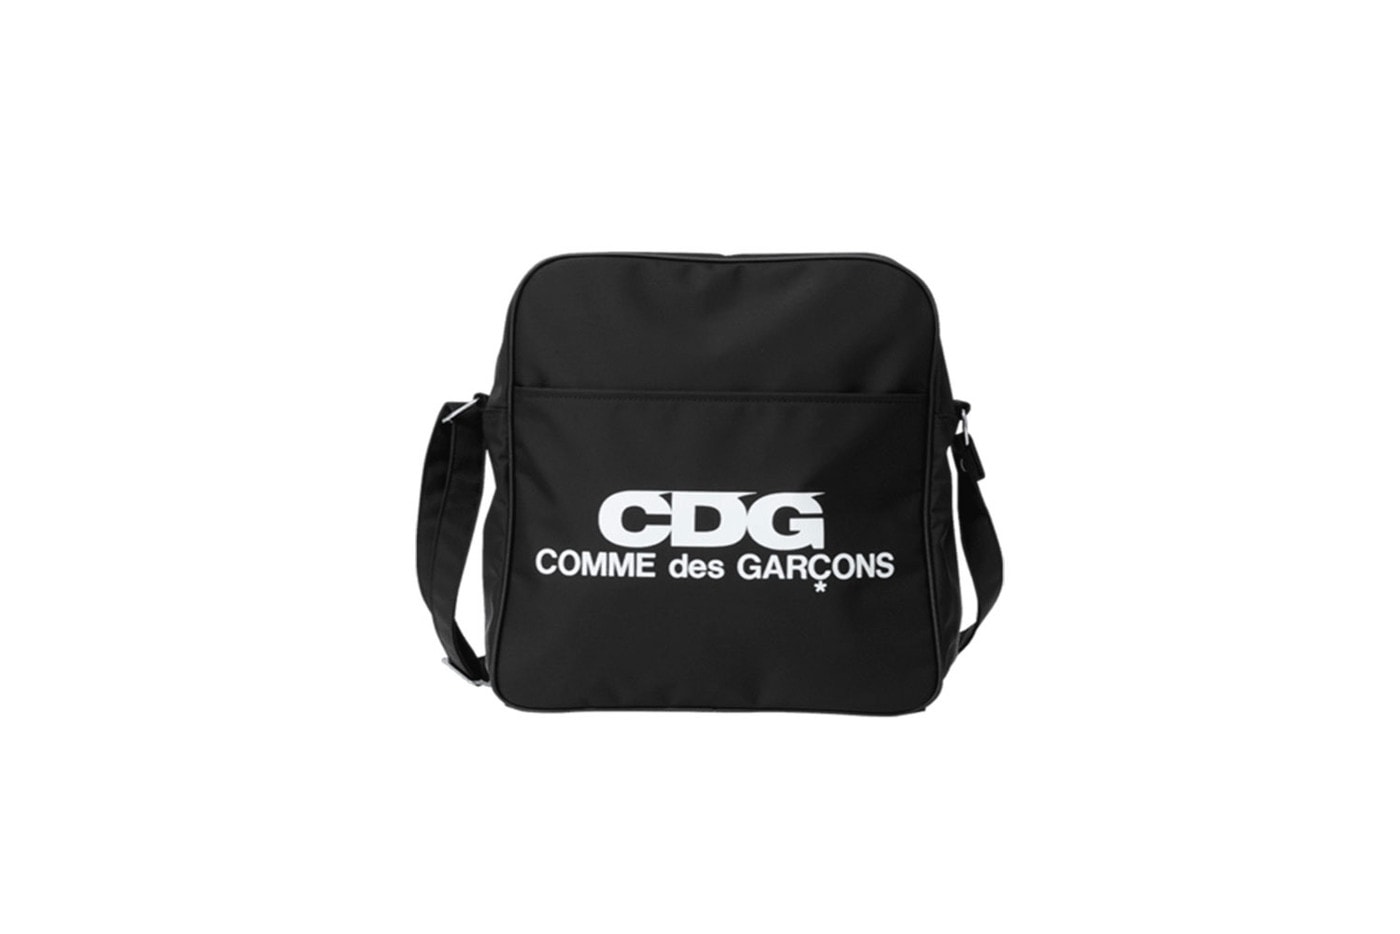 COMME des GARÇONS 支線 CDG 全新別注系列正式發佈